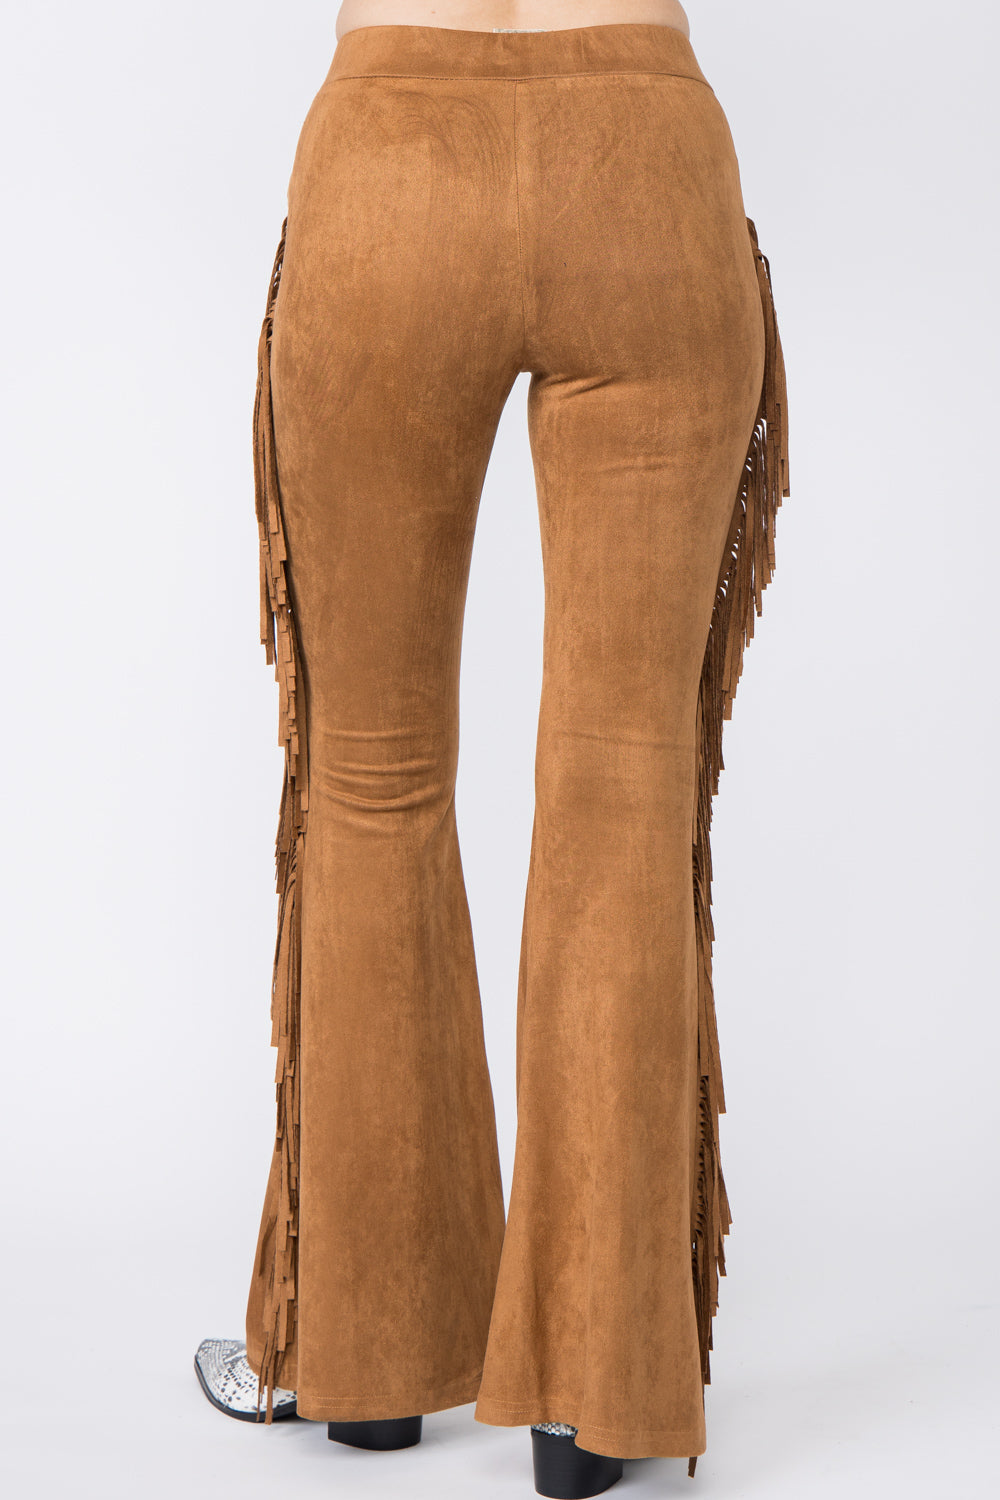 Camel Suede Bell Bottom Pants with Fringe Detail